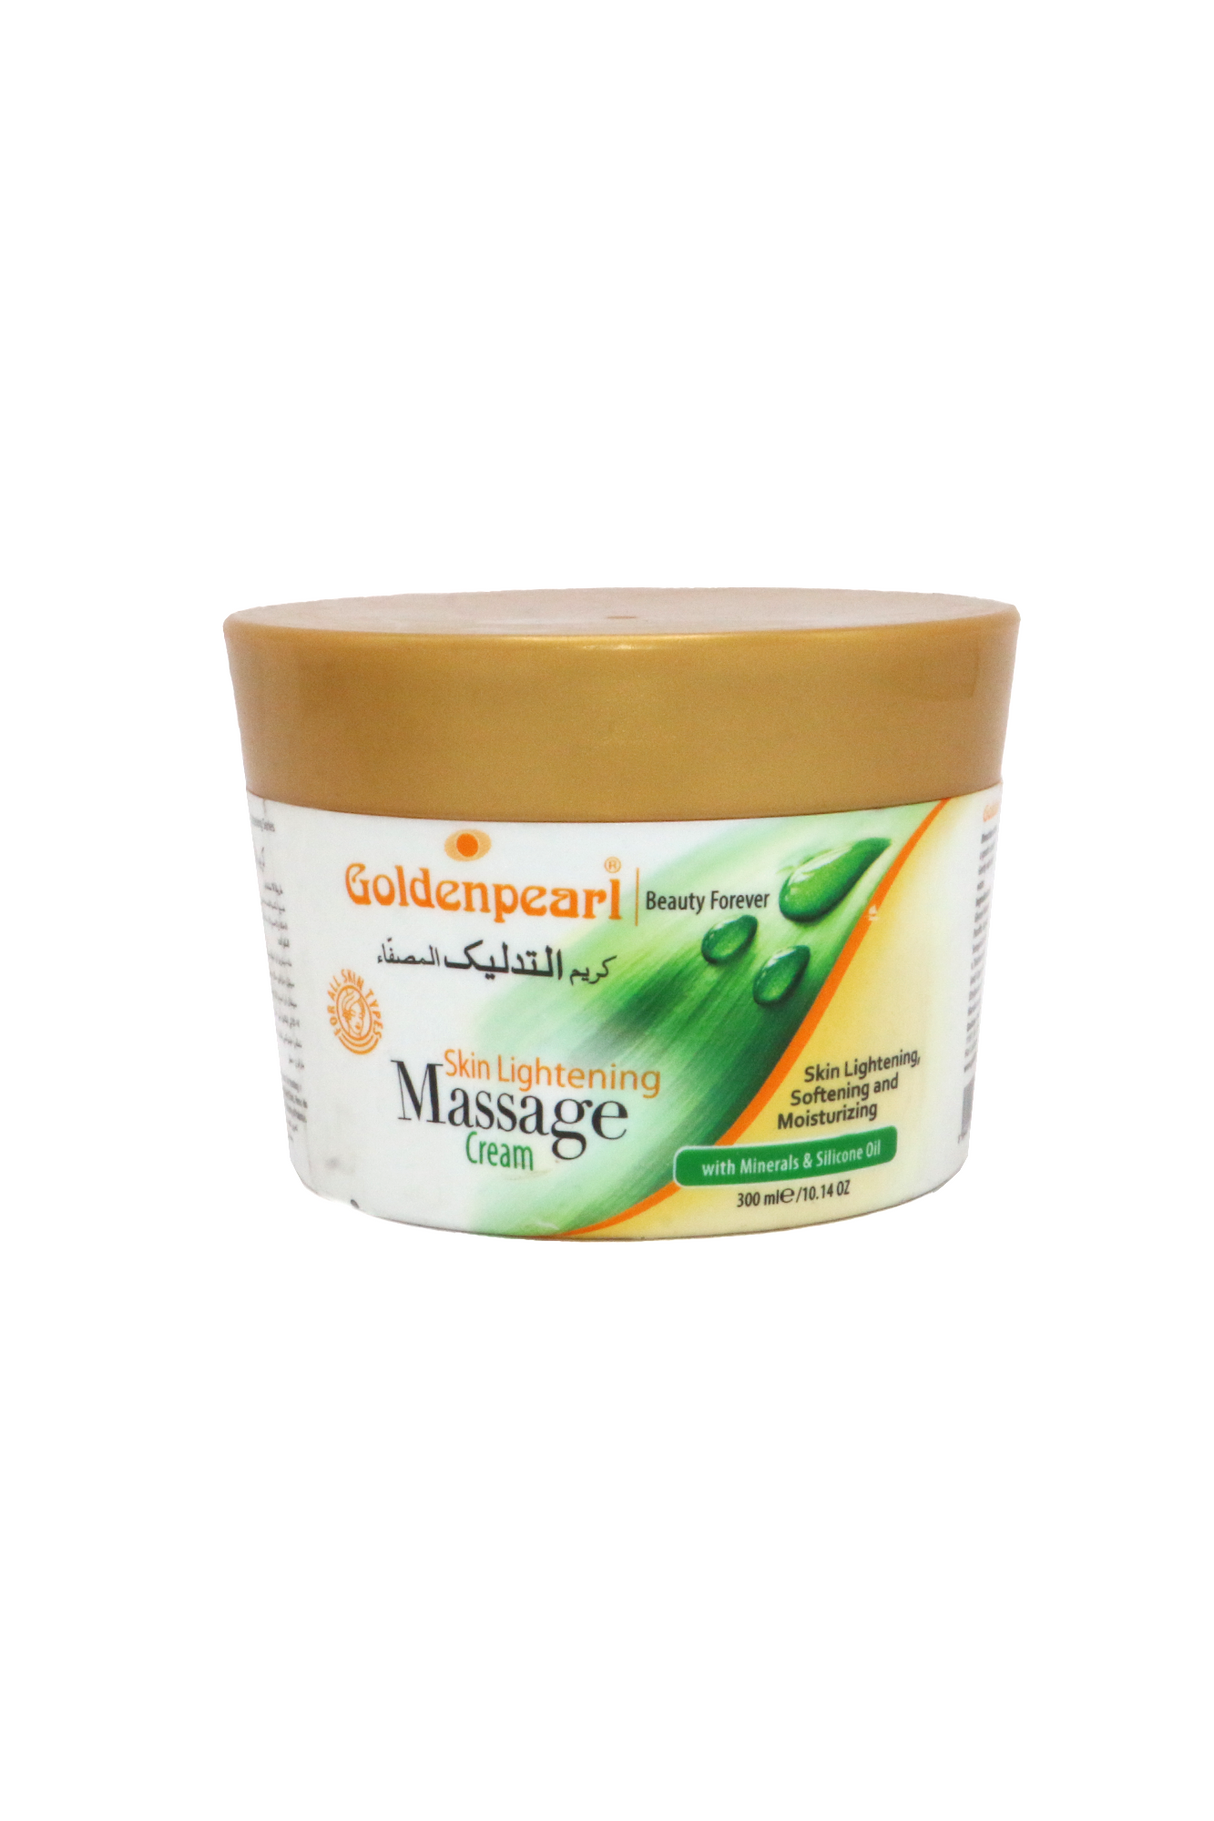 golden pearl massage cream skin lightening 300ml